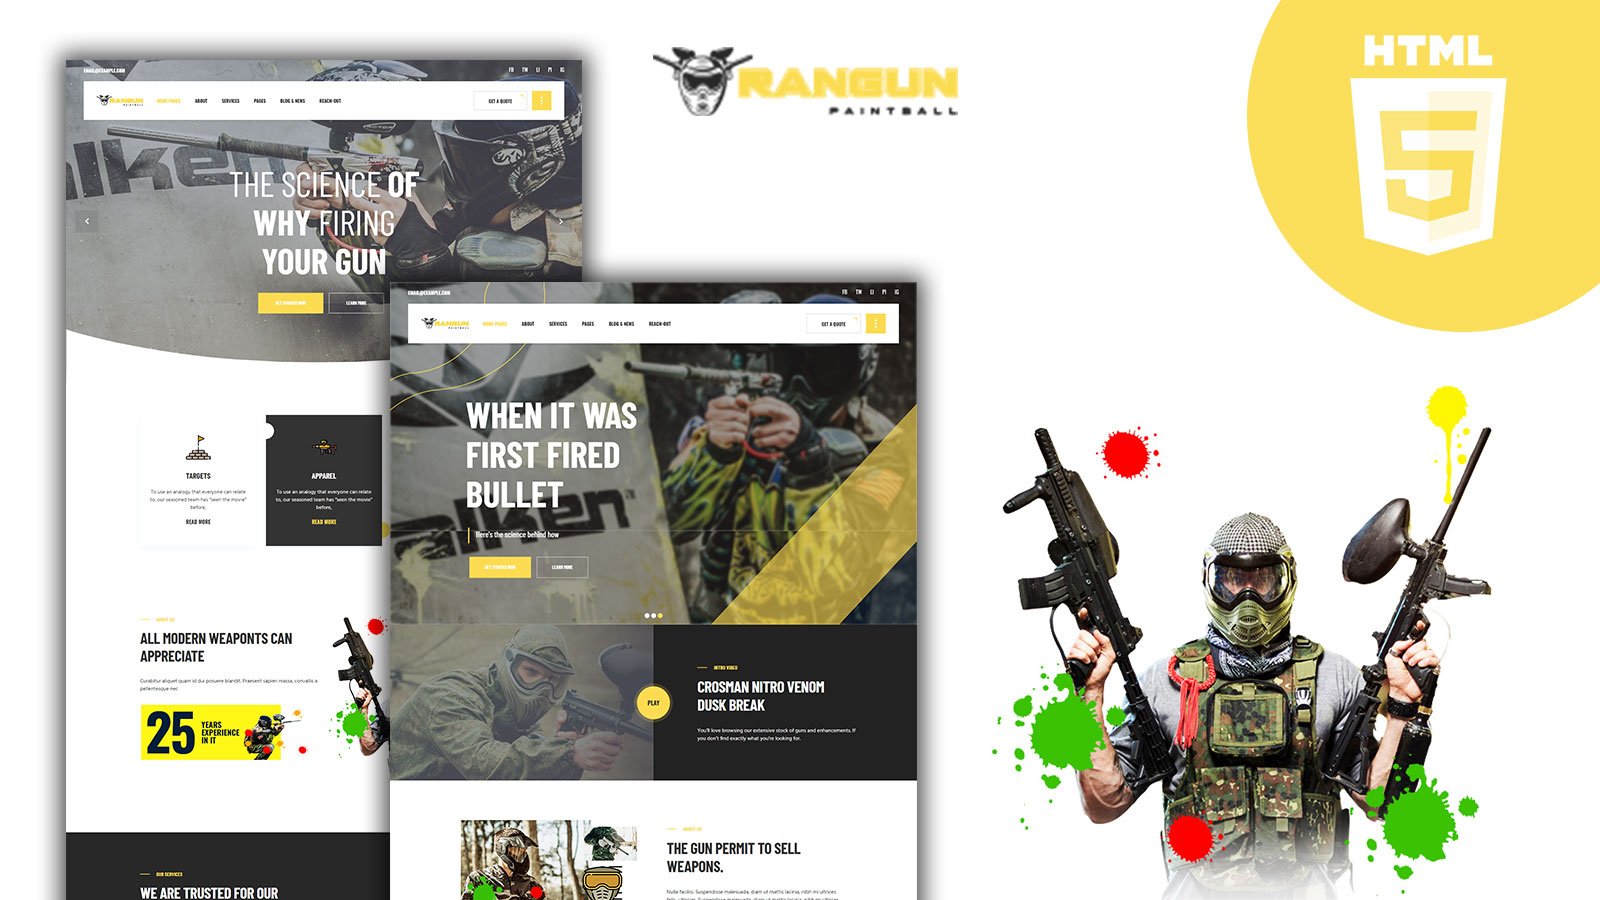 Rangun Air Soft Paintball Extreme Sports Club HTML5 Website Template